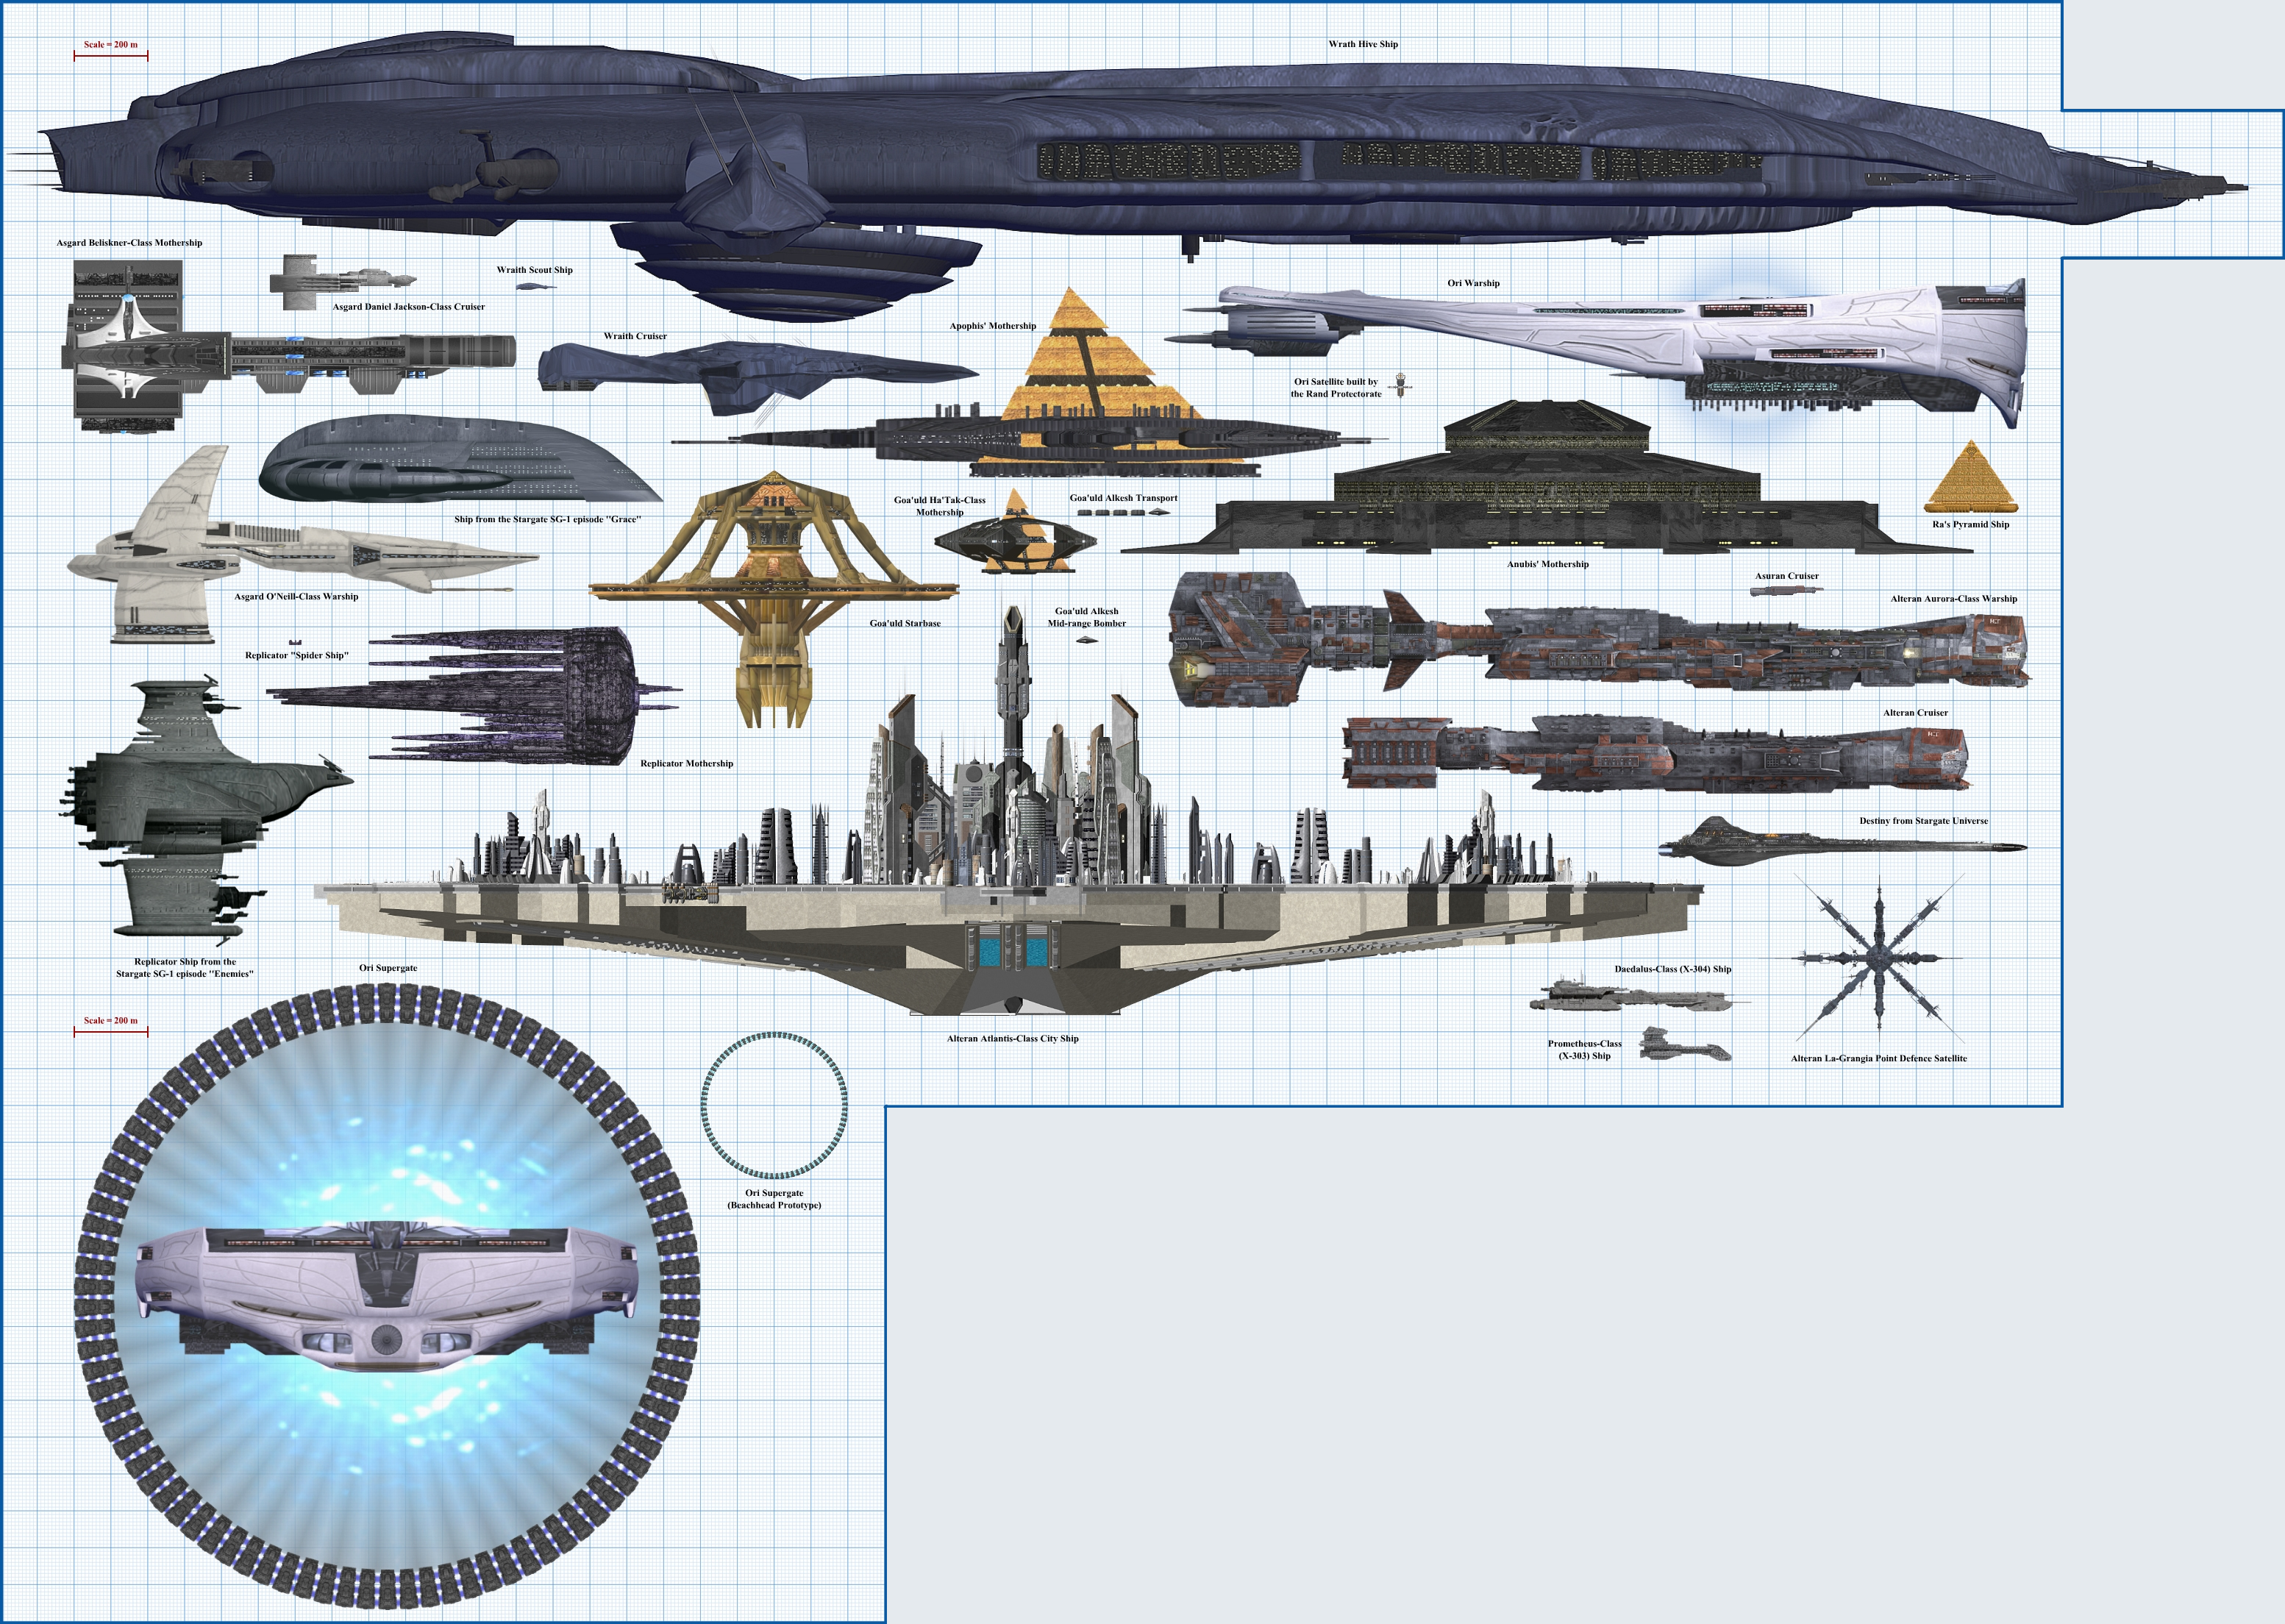 Image URL: http://gatecast.co.uk/wordpress/wp-content/uploads/2012/07/Stargate-Ships-B.jpg